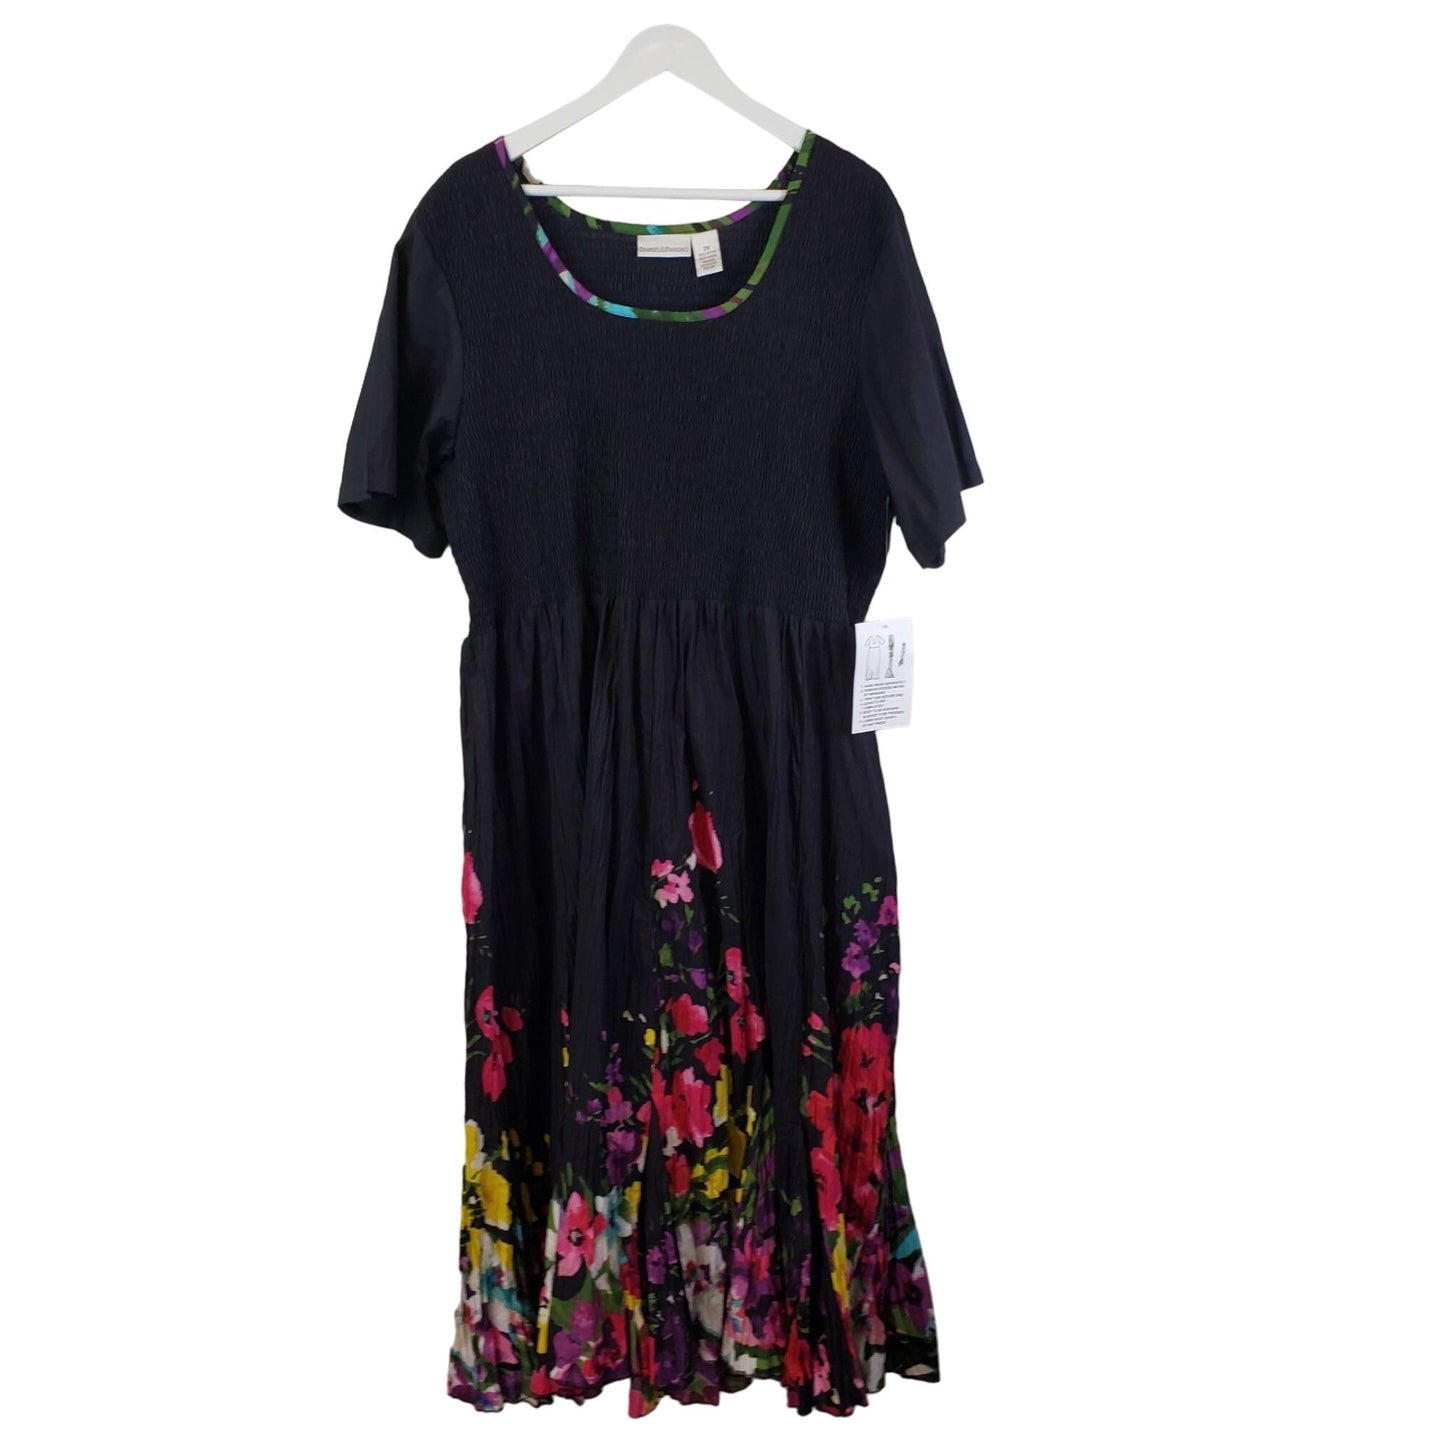 NWT Draper's & Damon's Smocked Floral Godet Midi Dress Size 2X